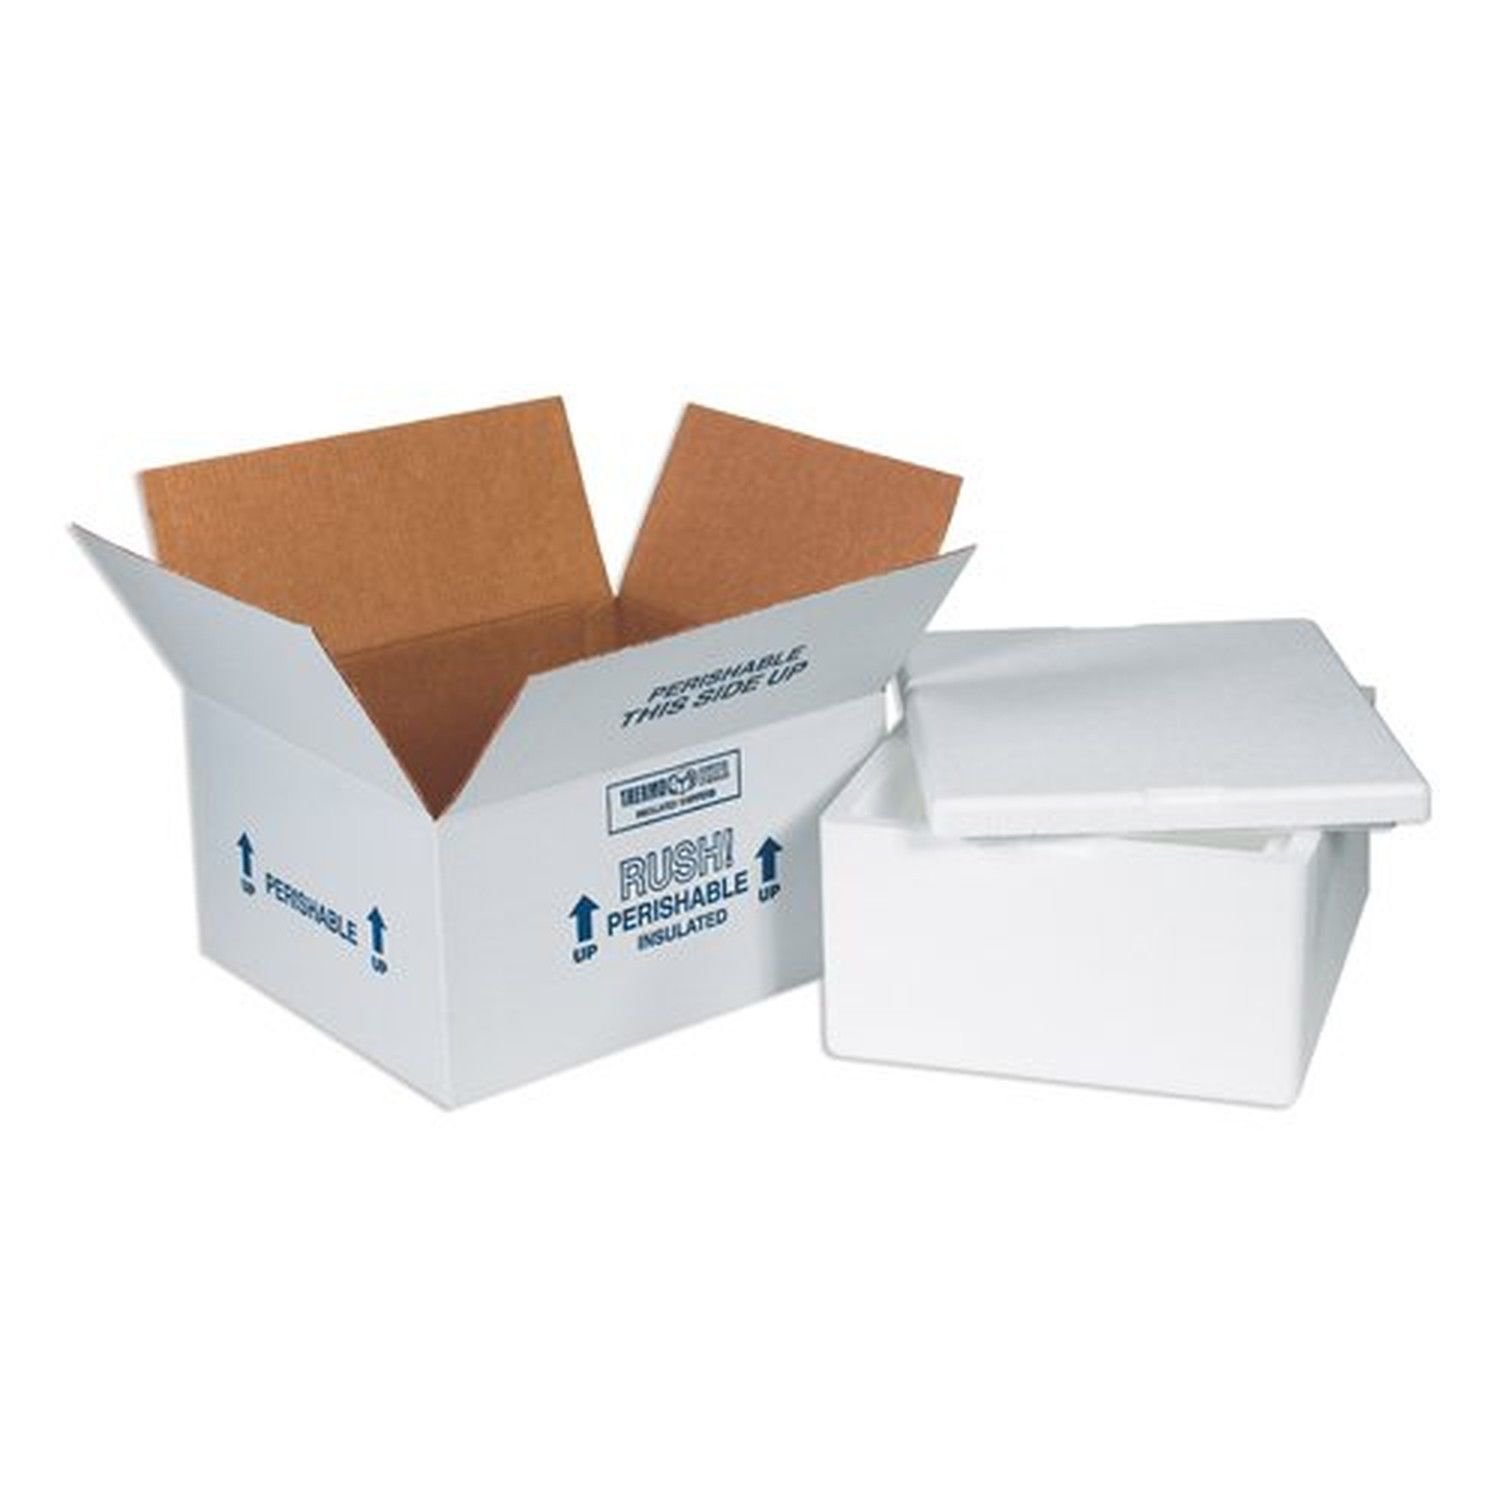 Insulated перевод. Insulated Box. Display shipper упаковка. Insulated Box Cooltemp. Бокс из БС.